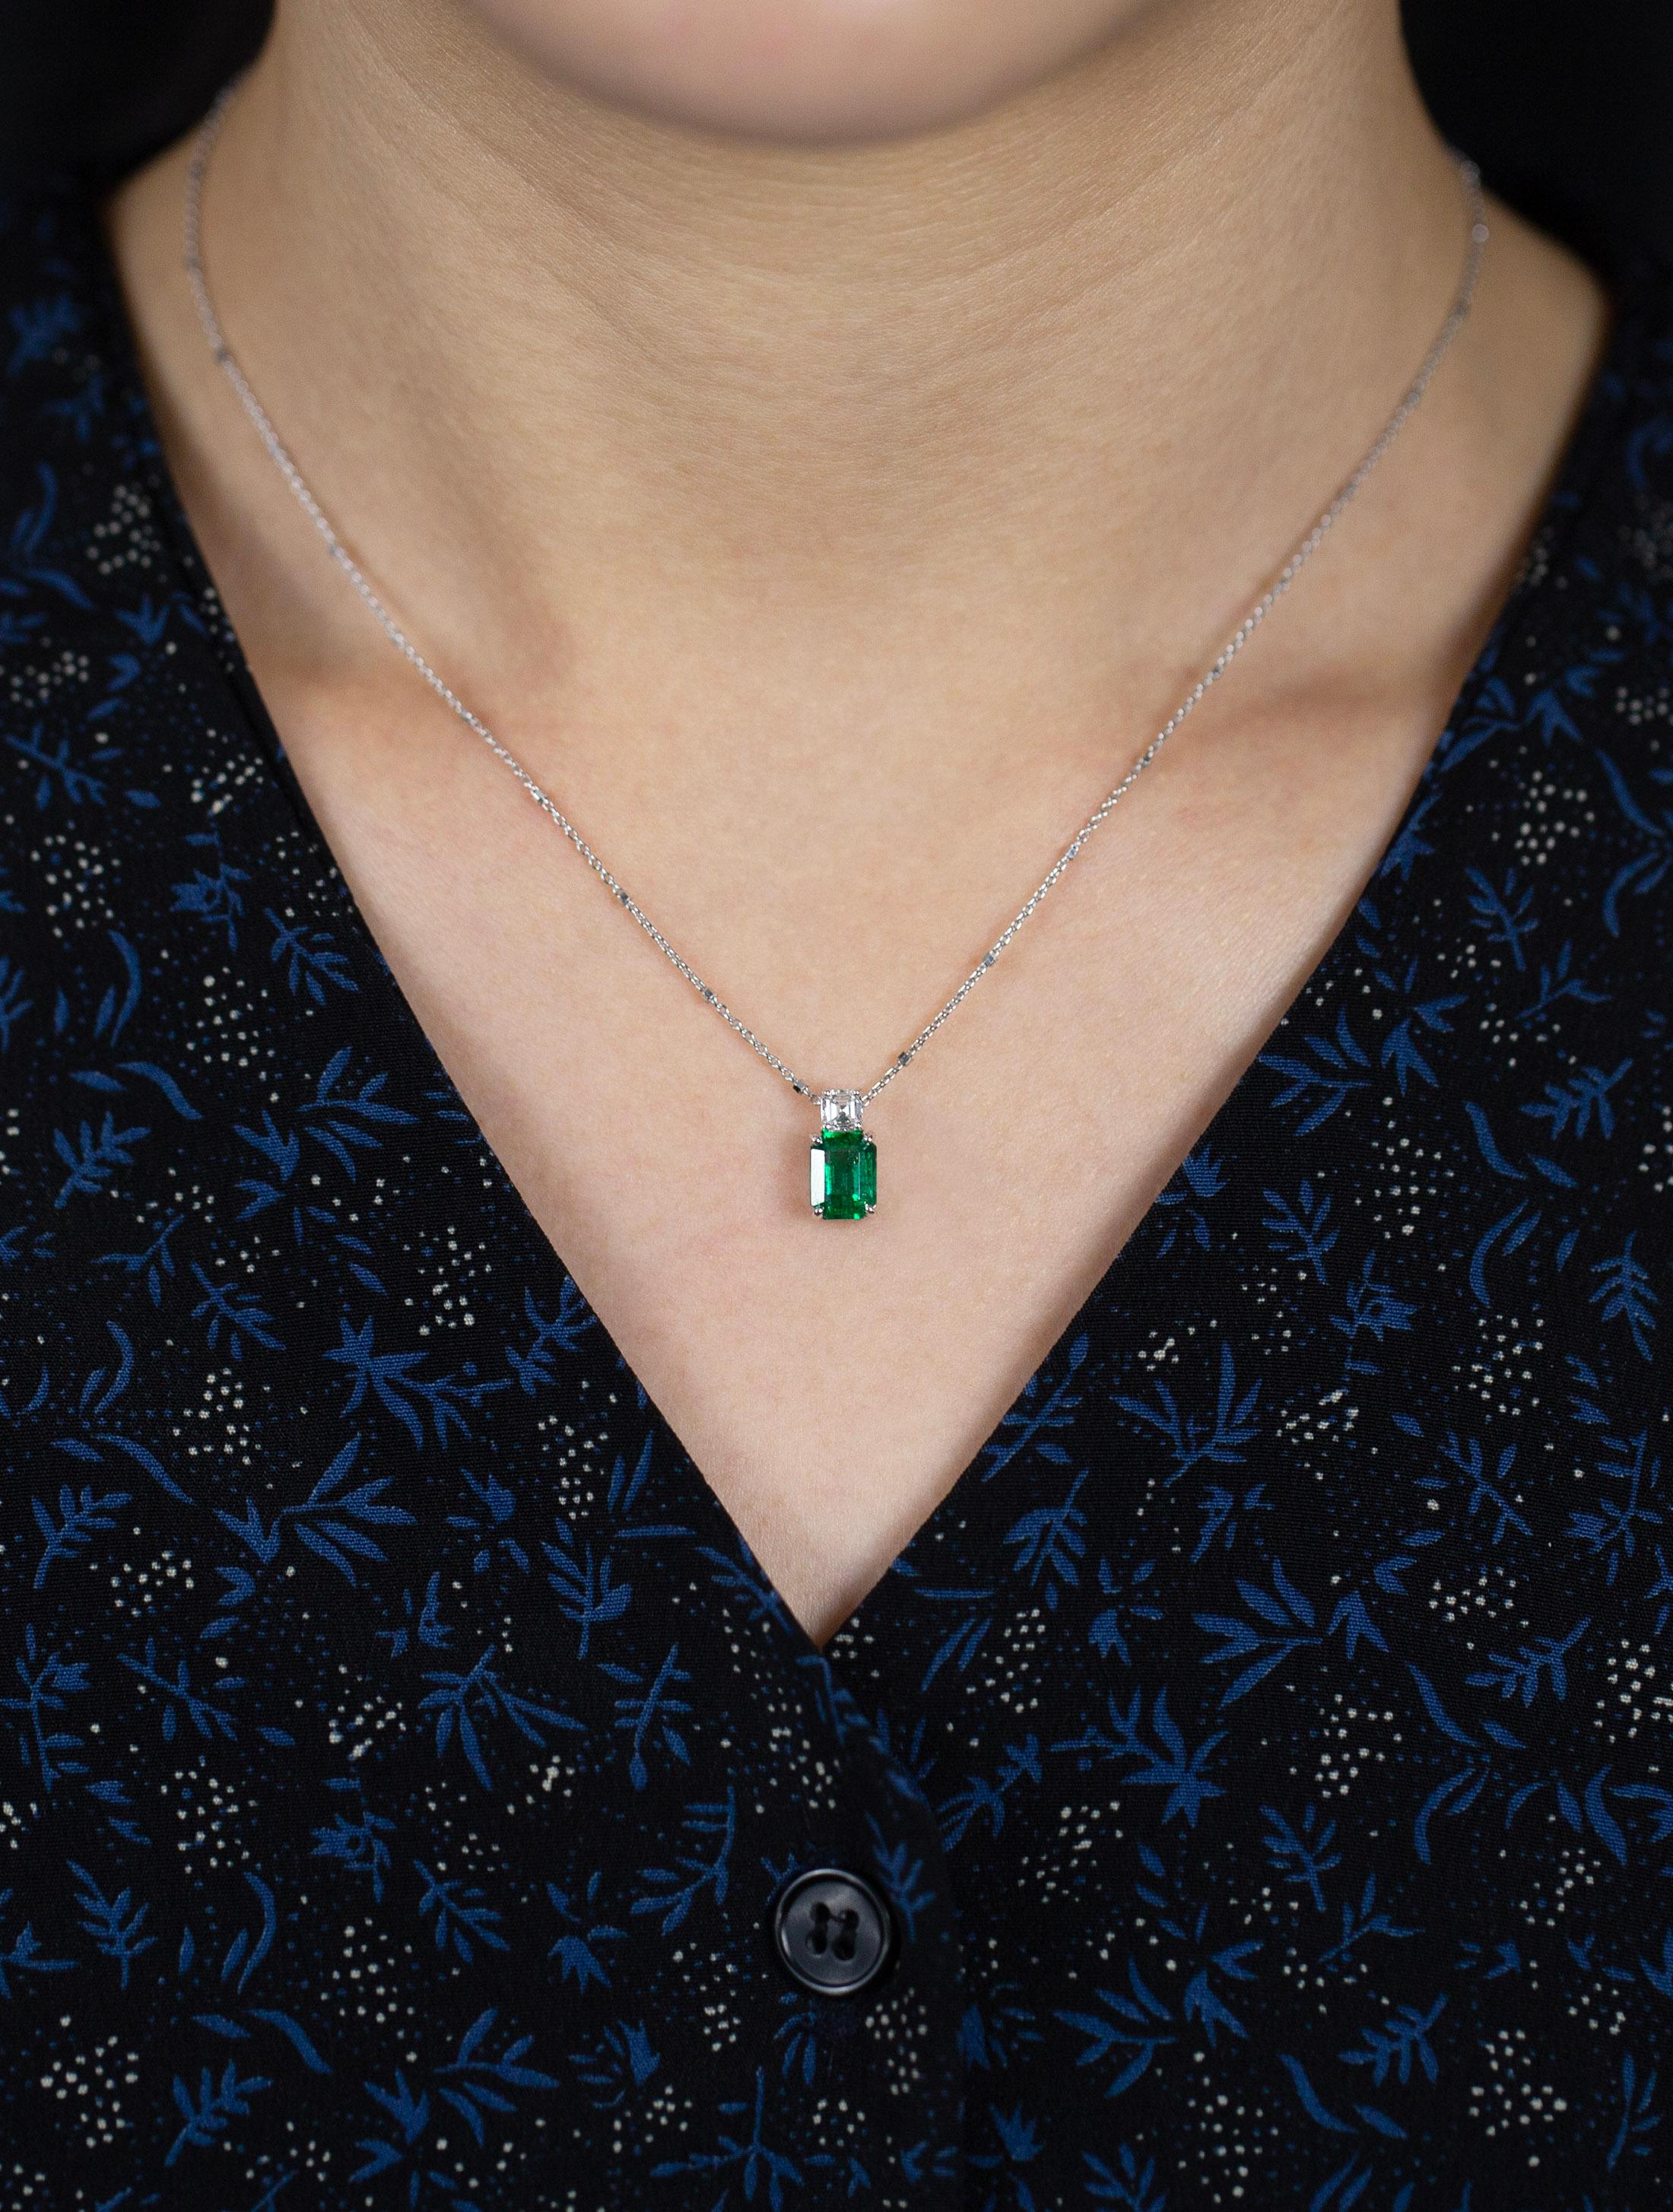 Women's Roman Malakov 1.27 Carat Emerald Cut Green Emerald and Diamond Pendant Necklace For Sale